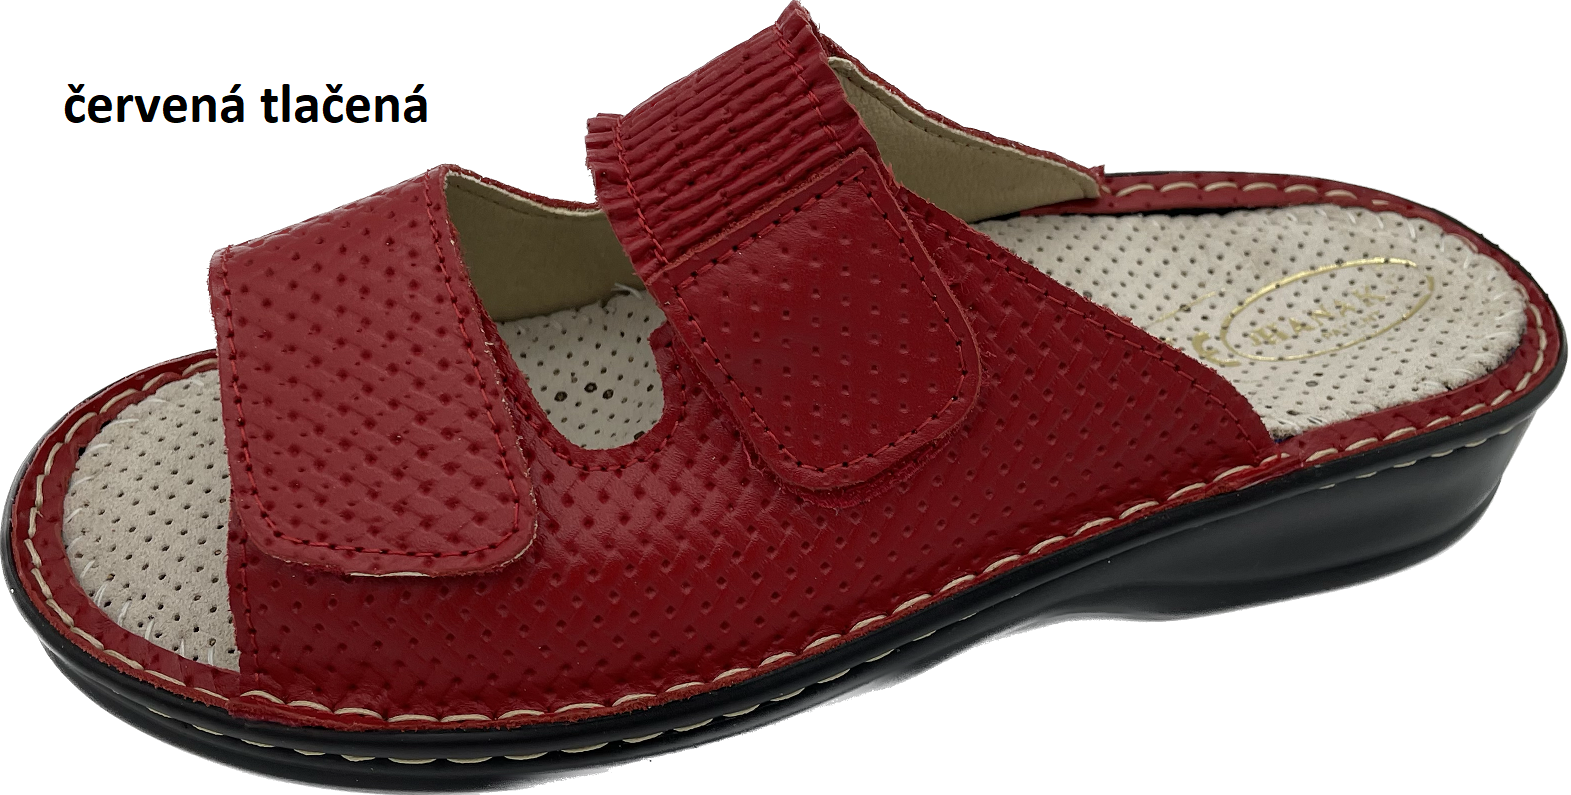 Boty Hanák vzor 304 - černá podešev Barva usně: červená tlačená, Velikosti obuvi: 35